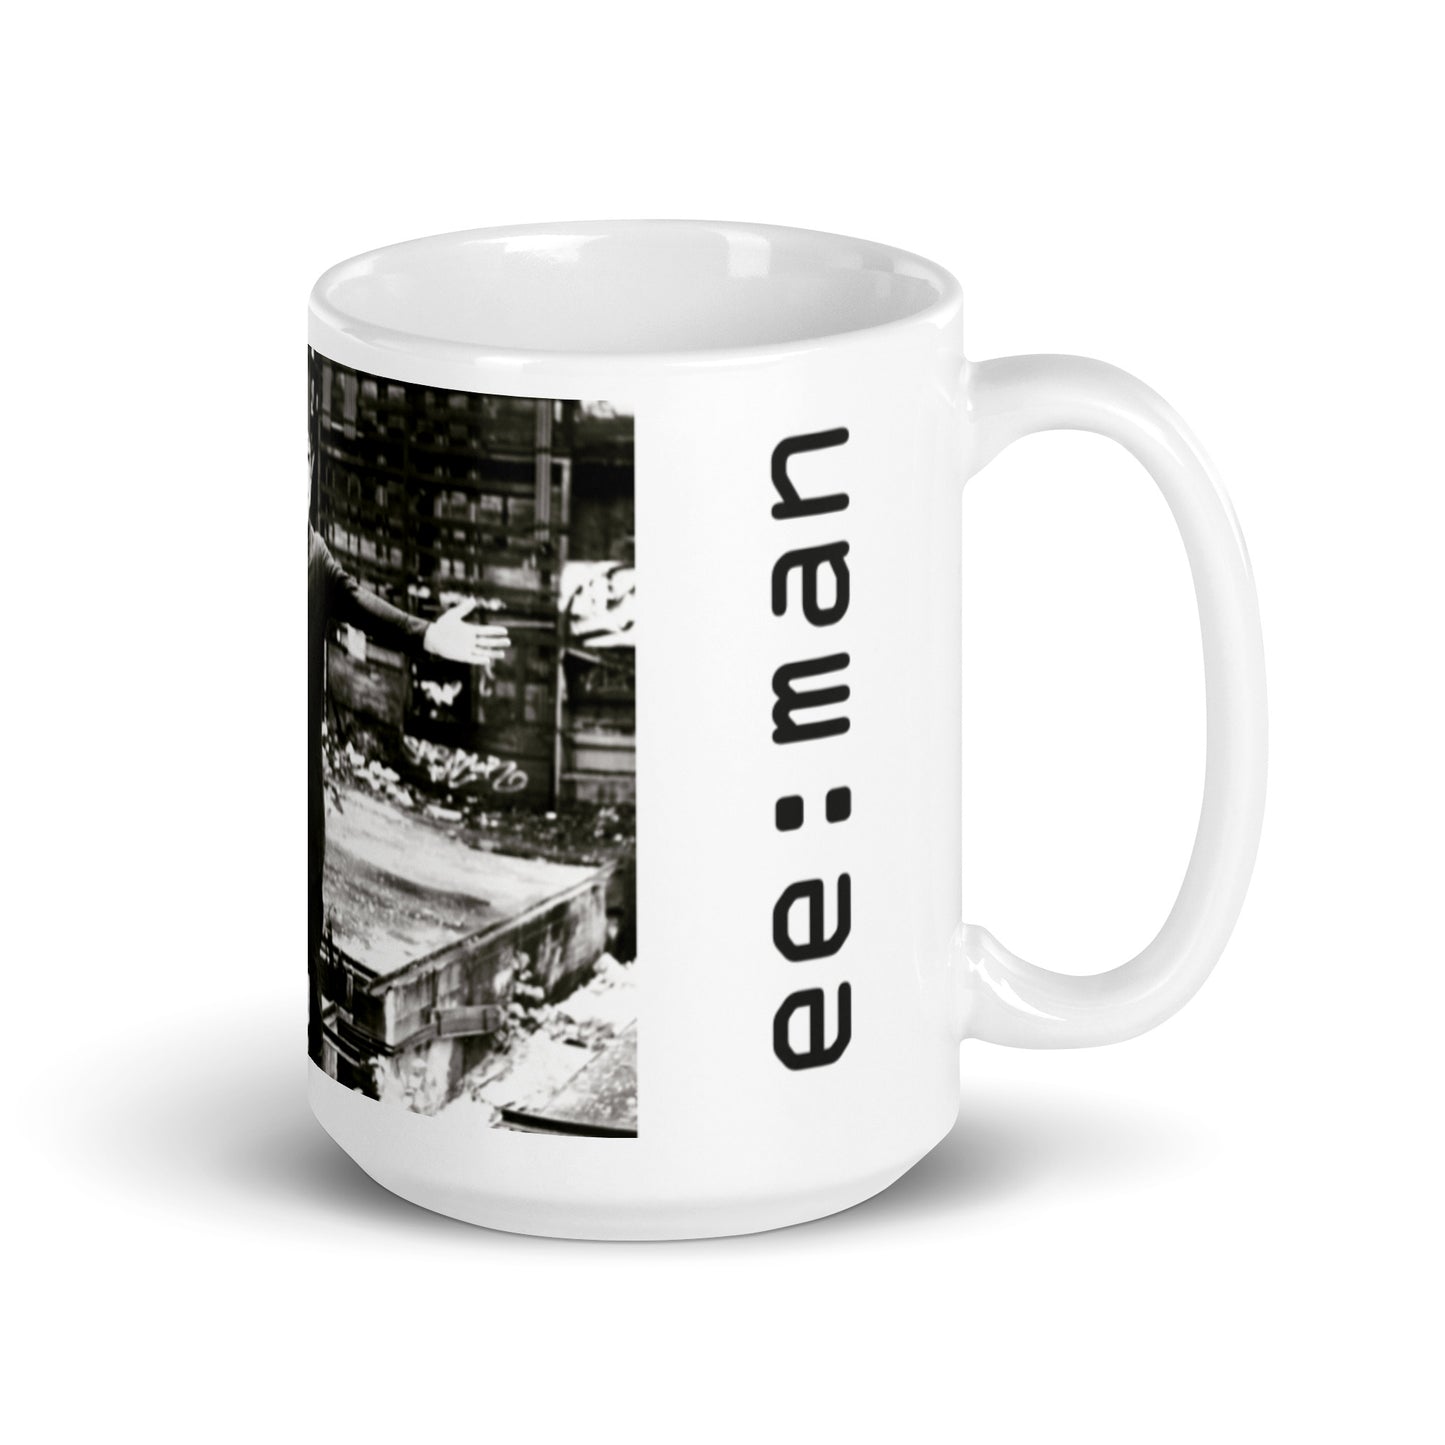 ee:man, official photo and logo, White glossy mug